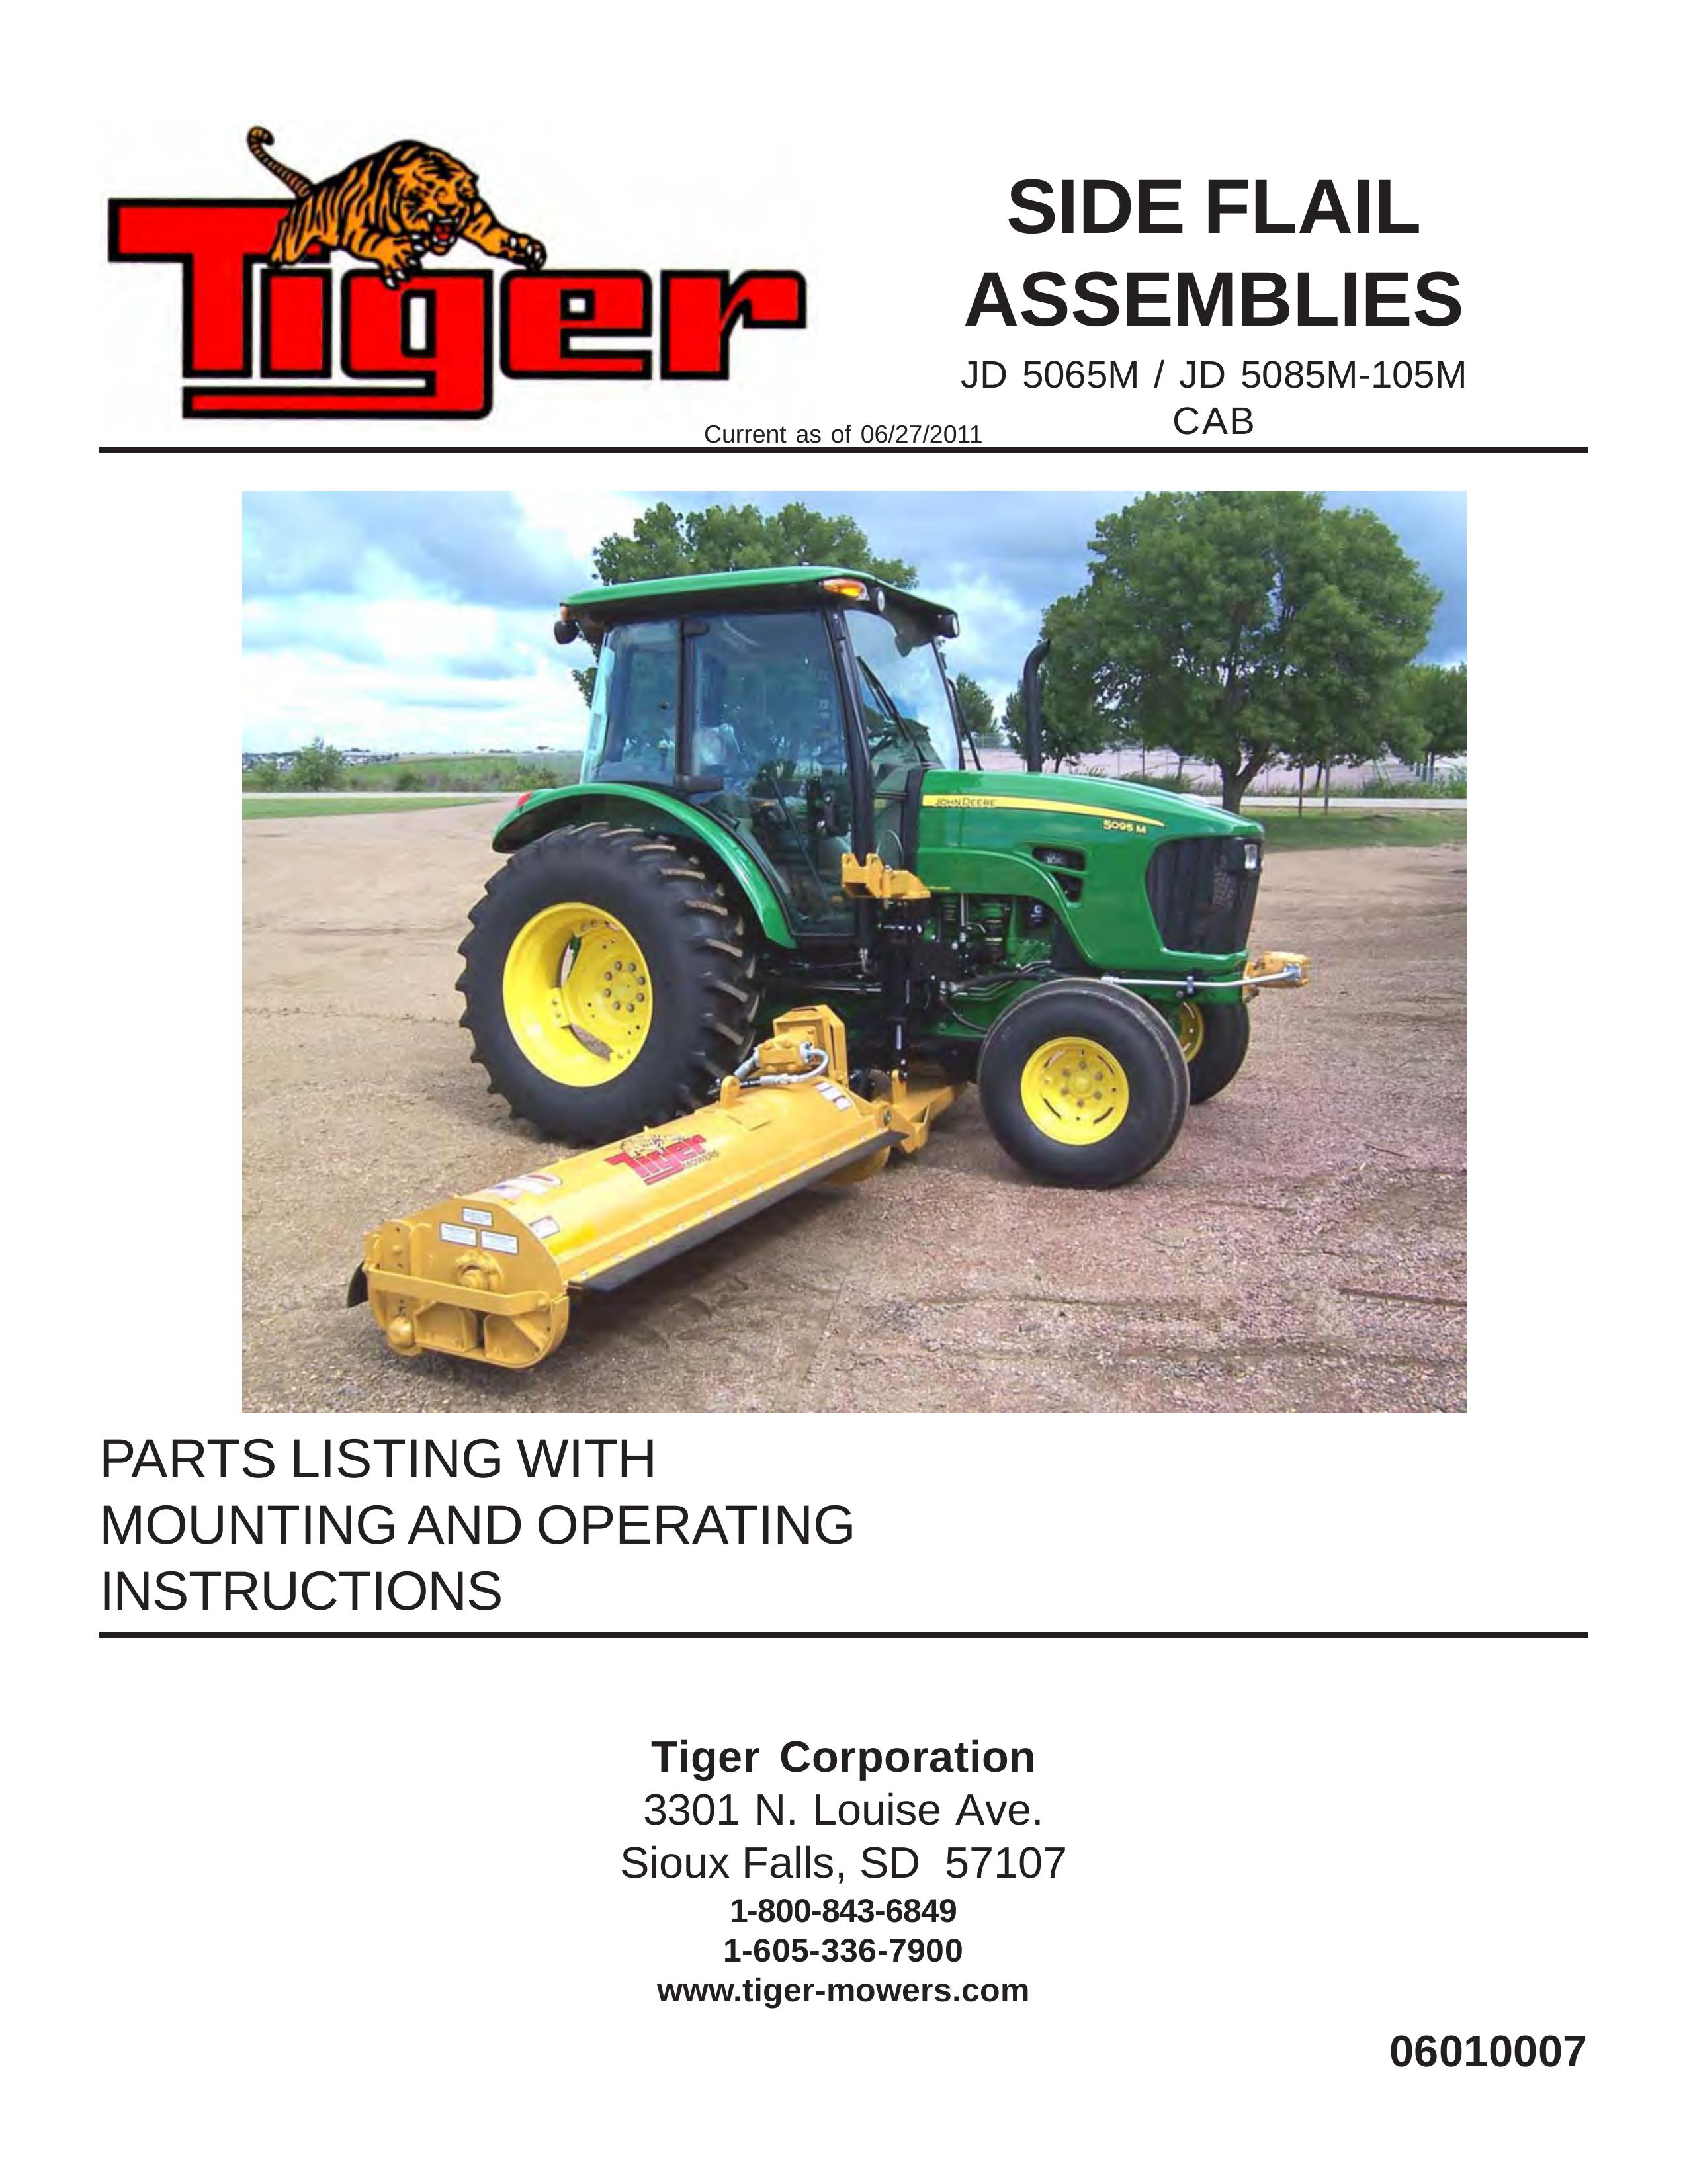 Tiger Mowers JD 5085M-105M Lawn Mower User Manual